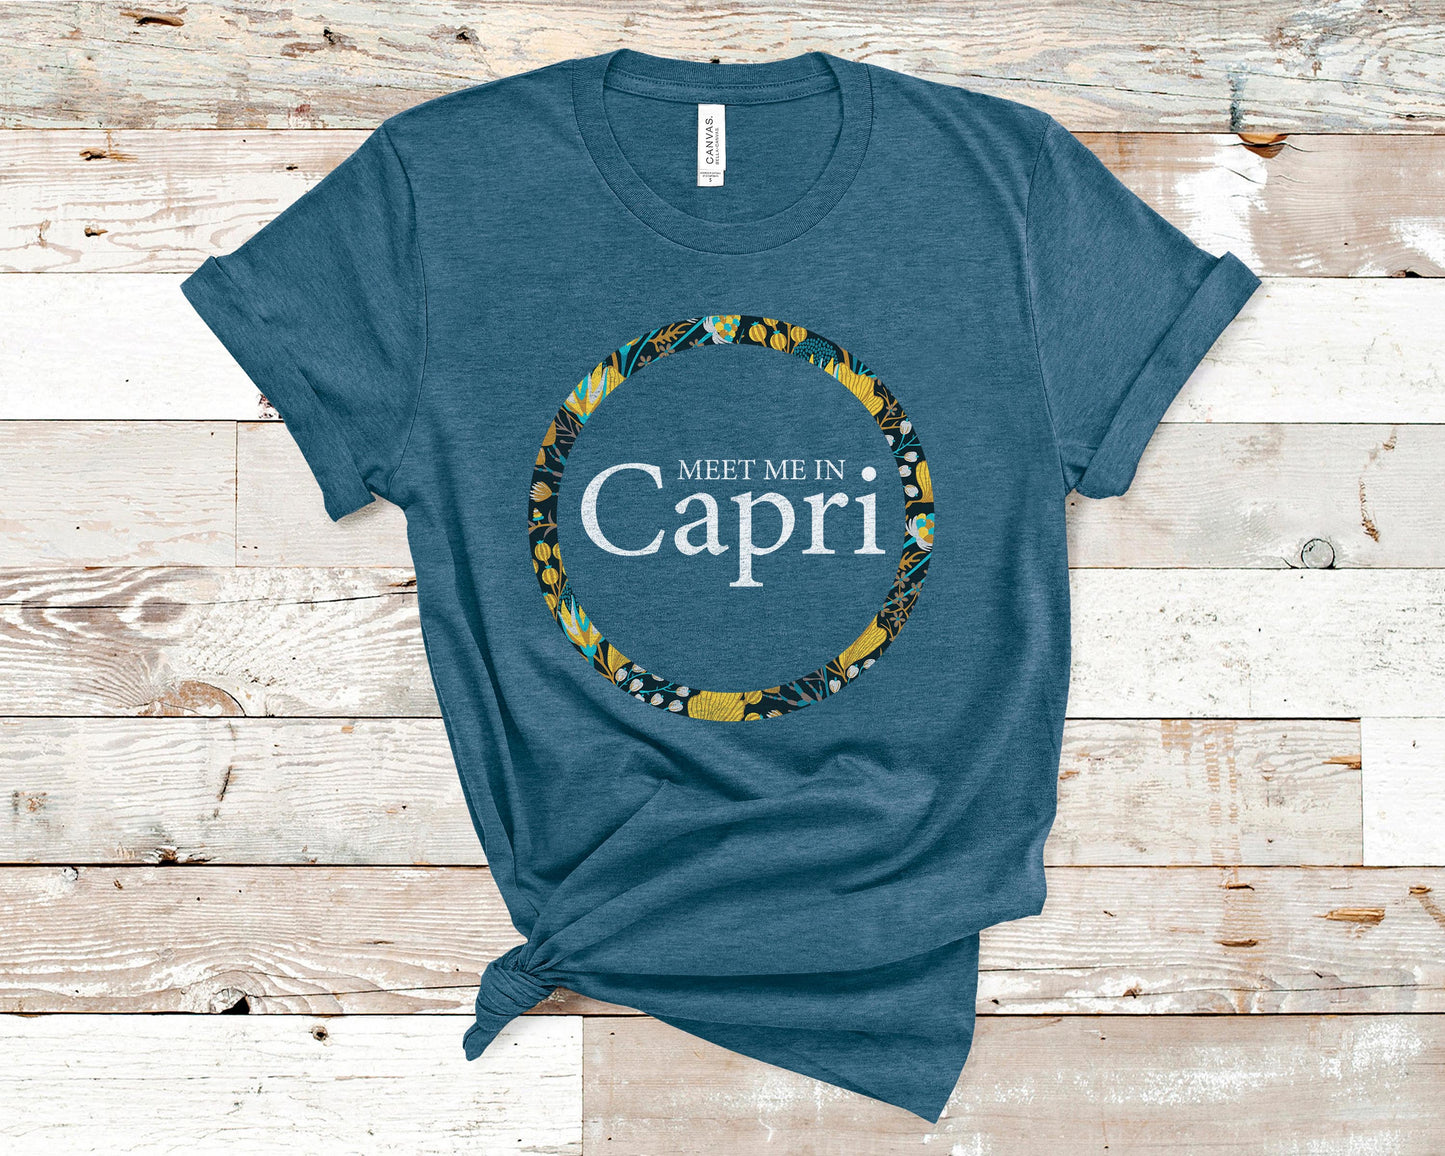 Meet Me in Capri - Travel/Vacation